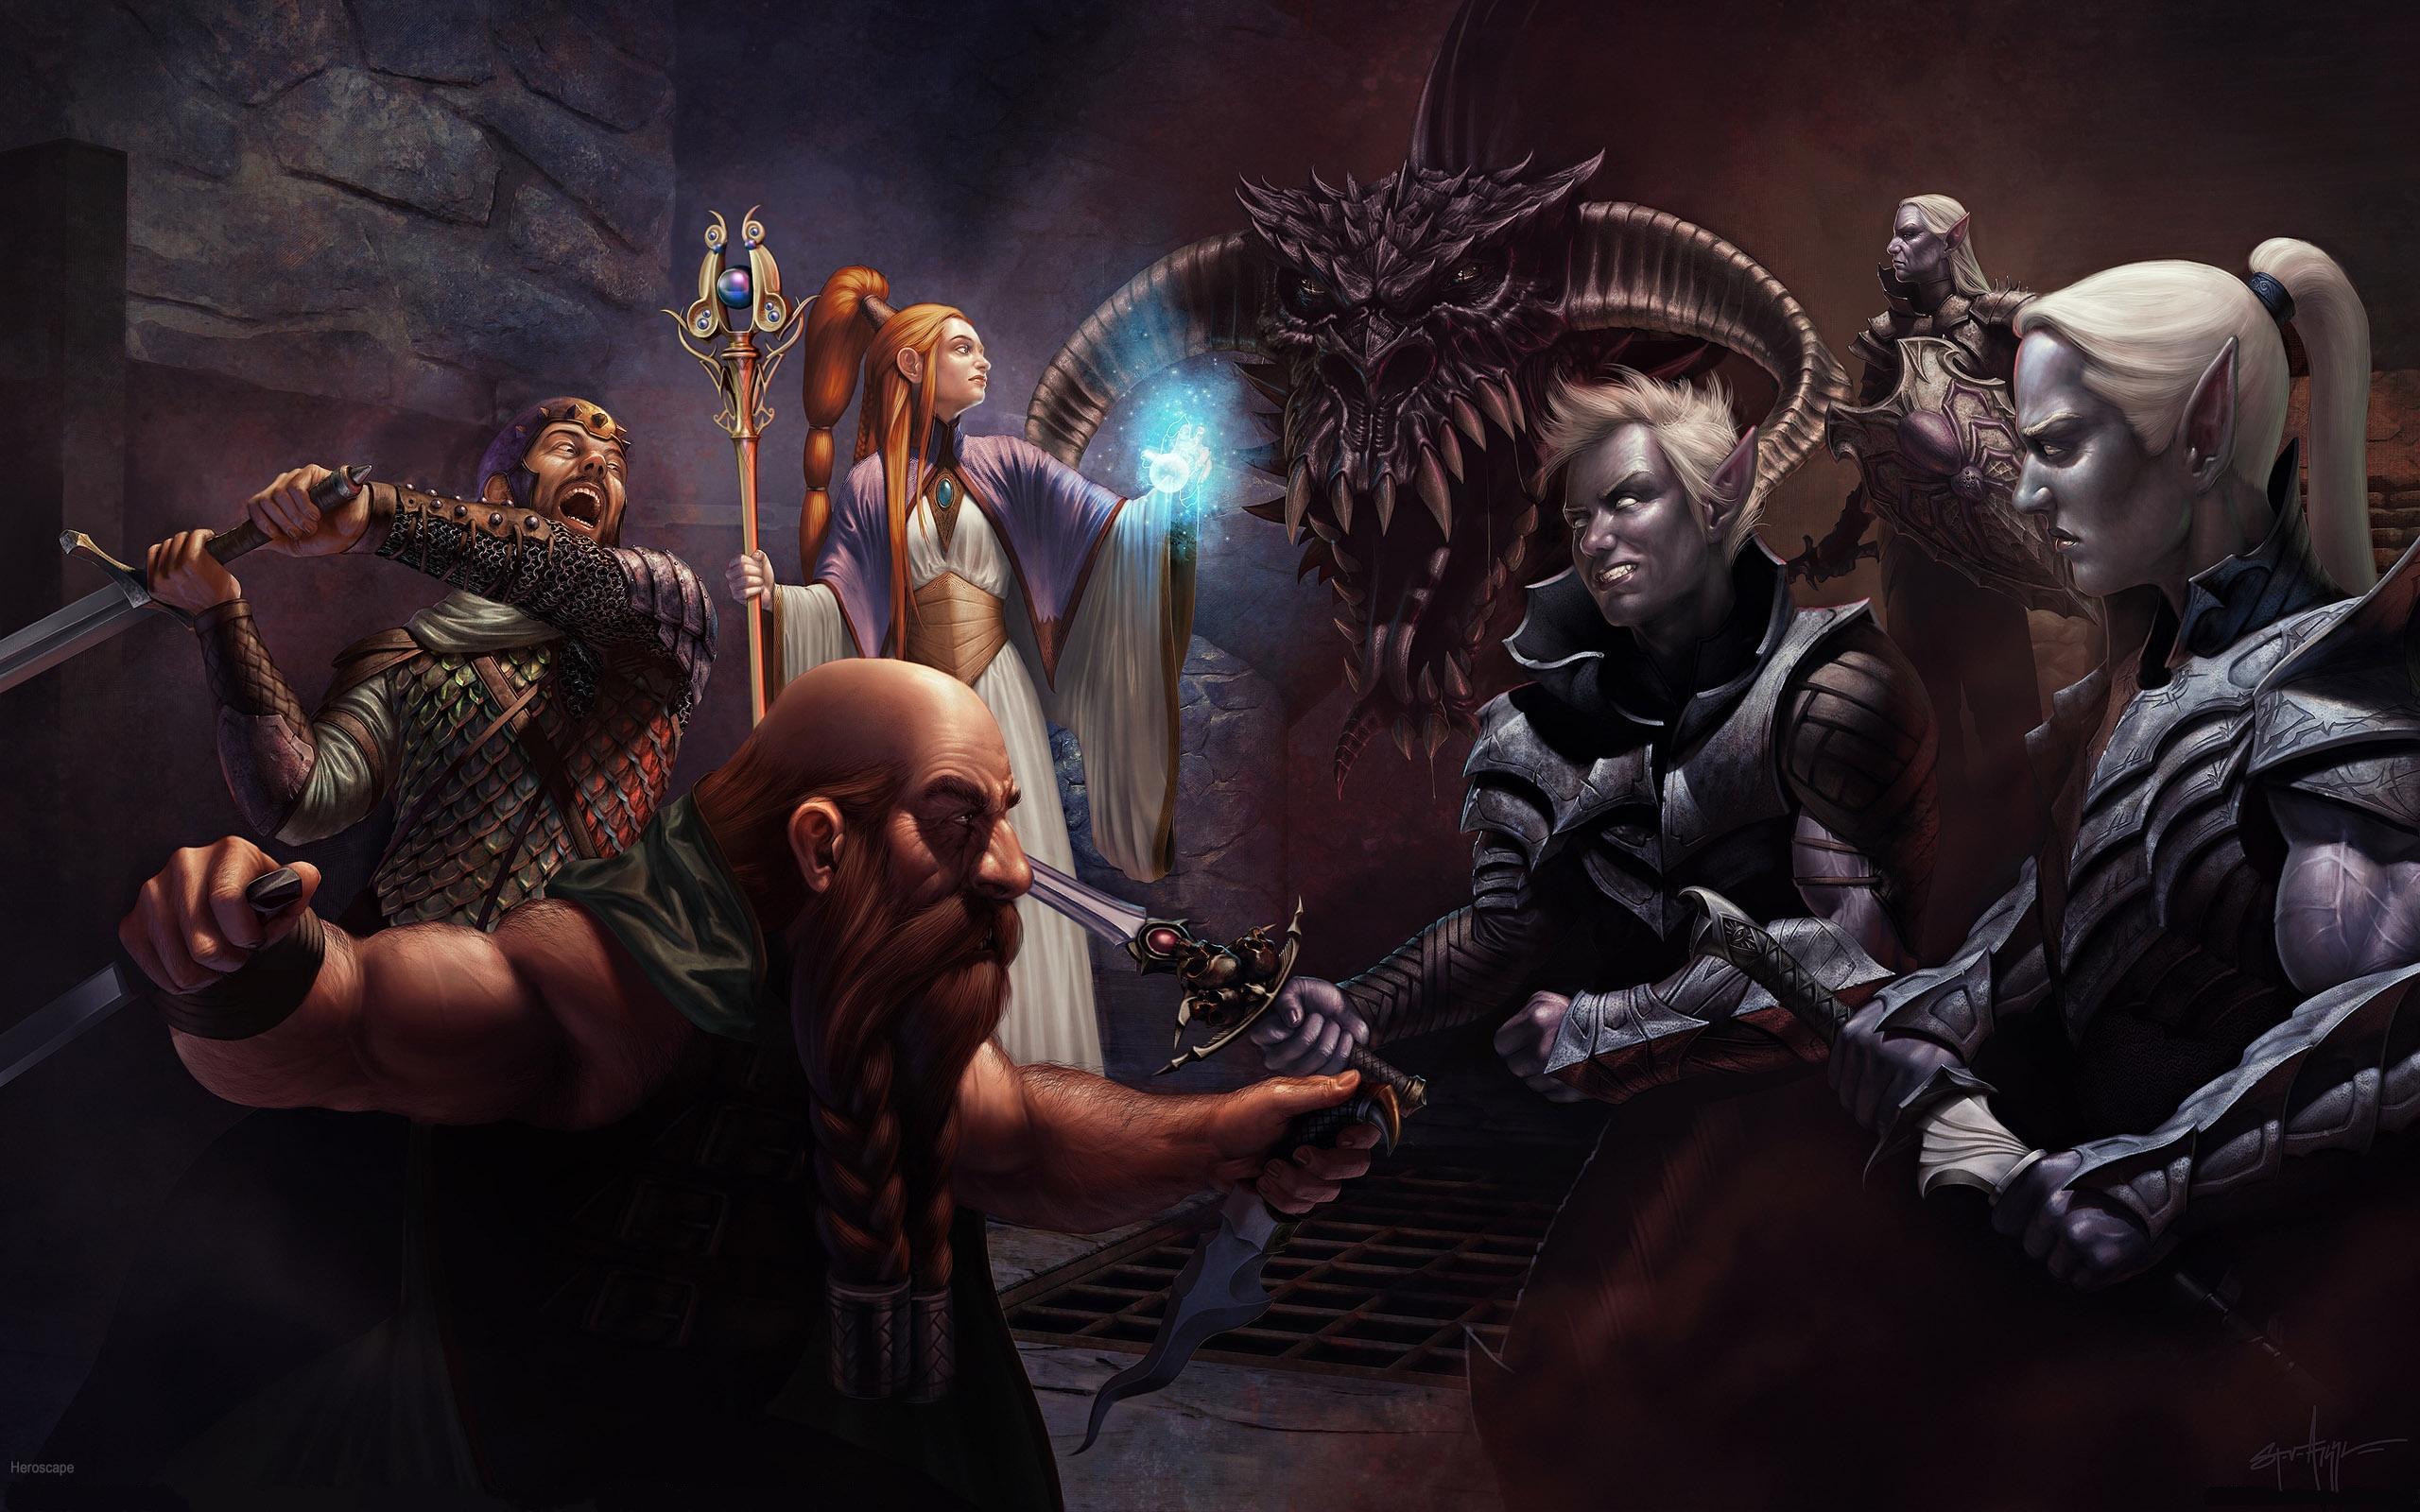 Fantasy Dungeons & Dragons Wallpaper 2560x1600 px Free Download